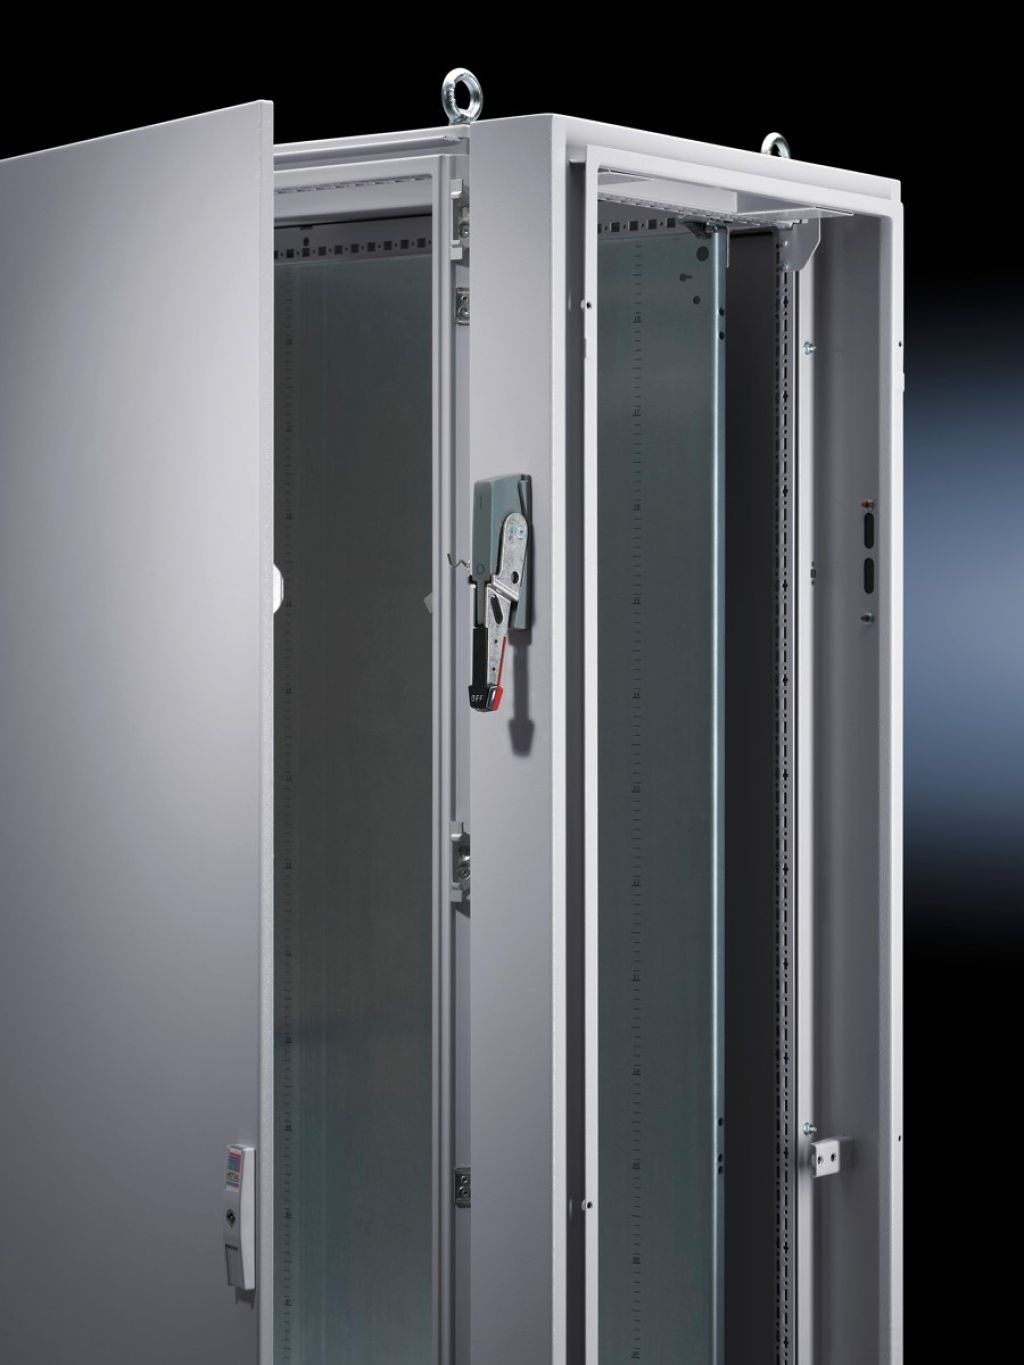 TS isolator door cover (US version)